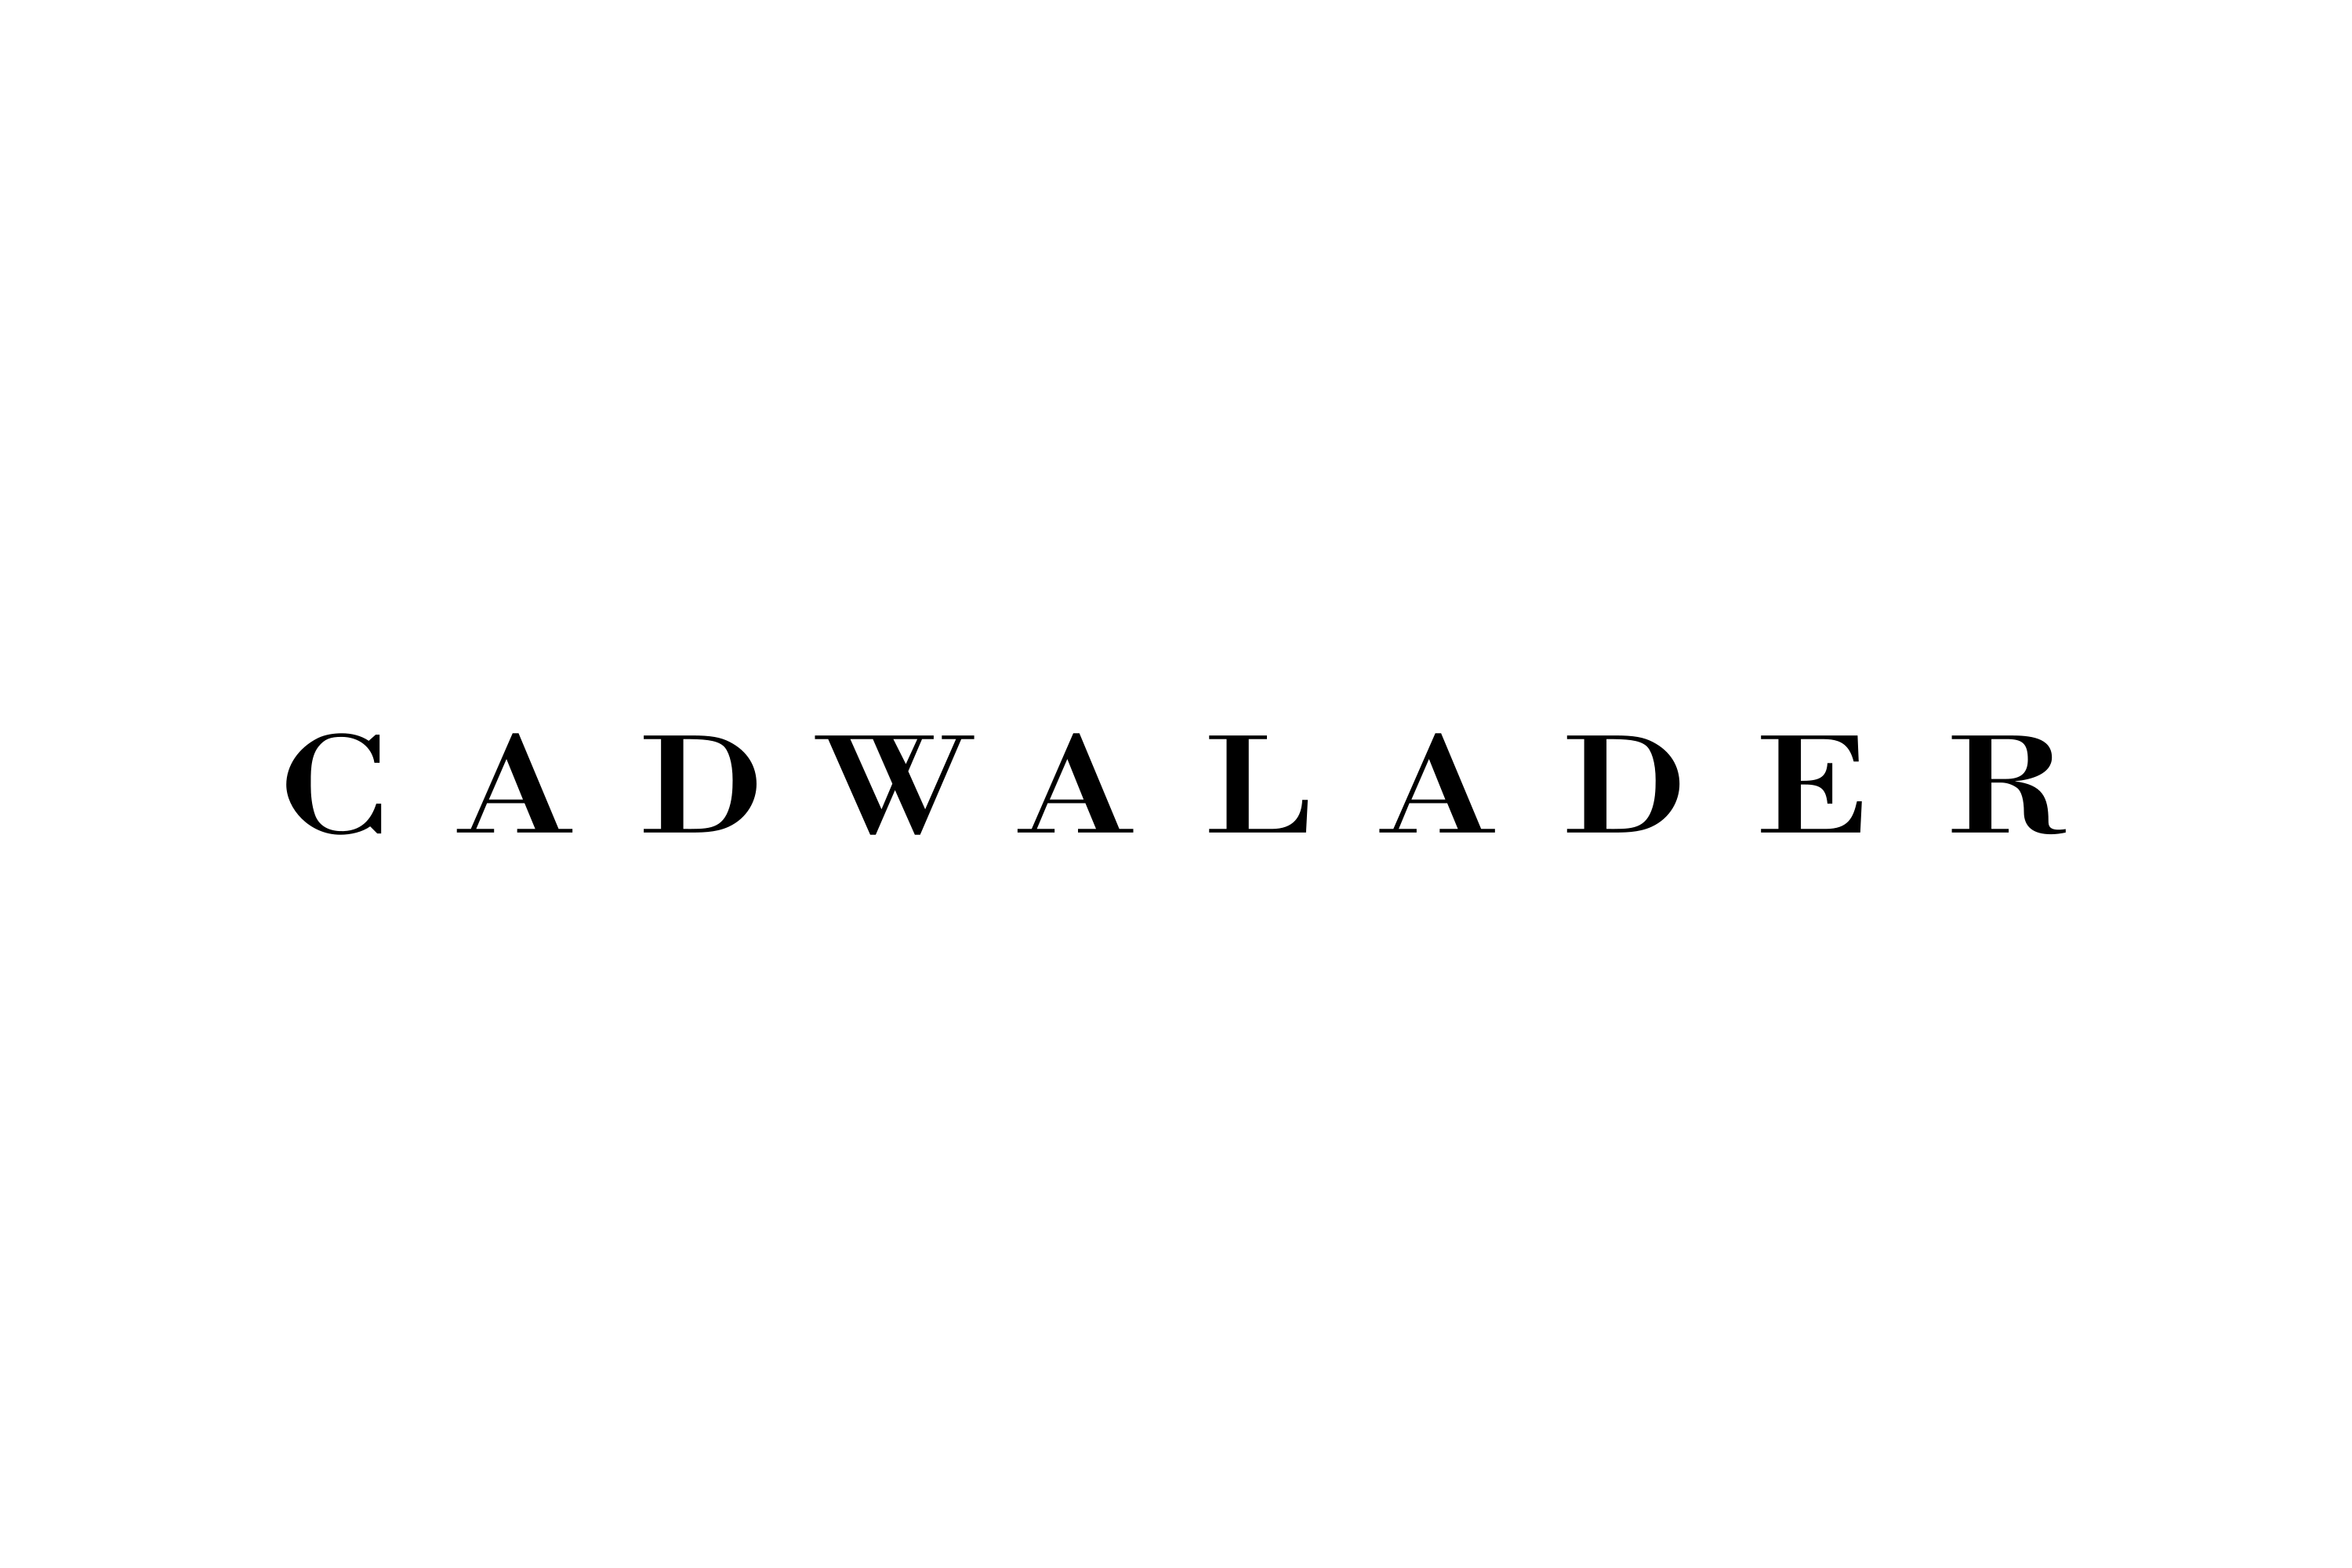 Download Cadwalader, Wickersham & Taft Logo in SVG Vector or PNG File ...